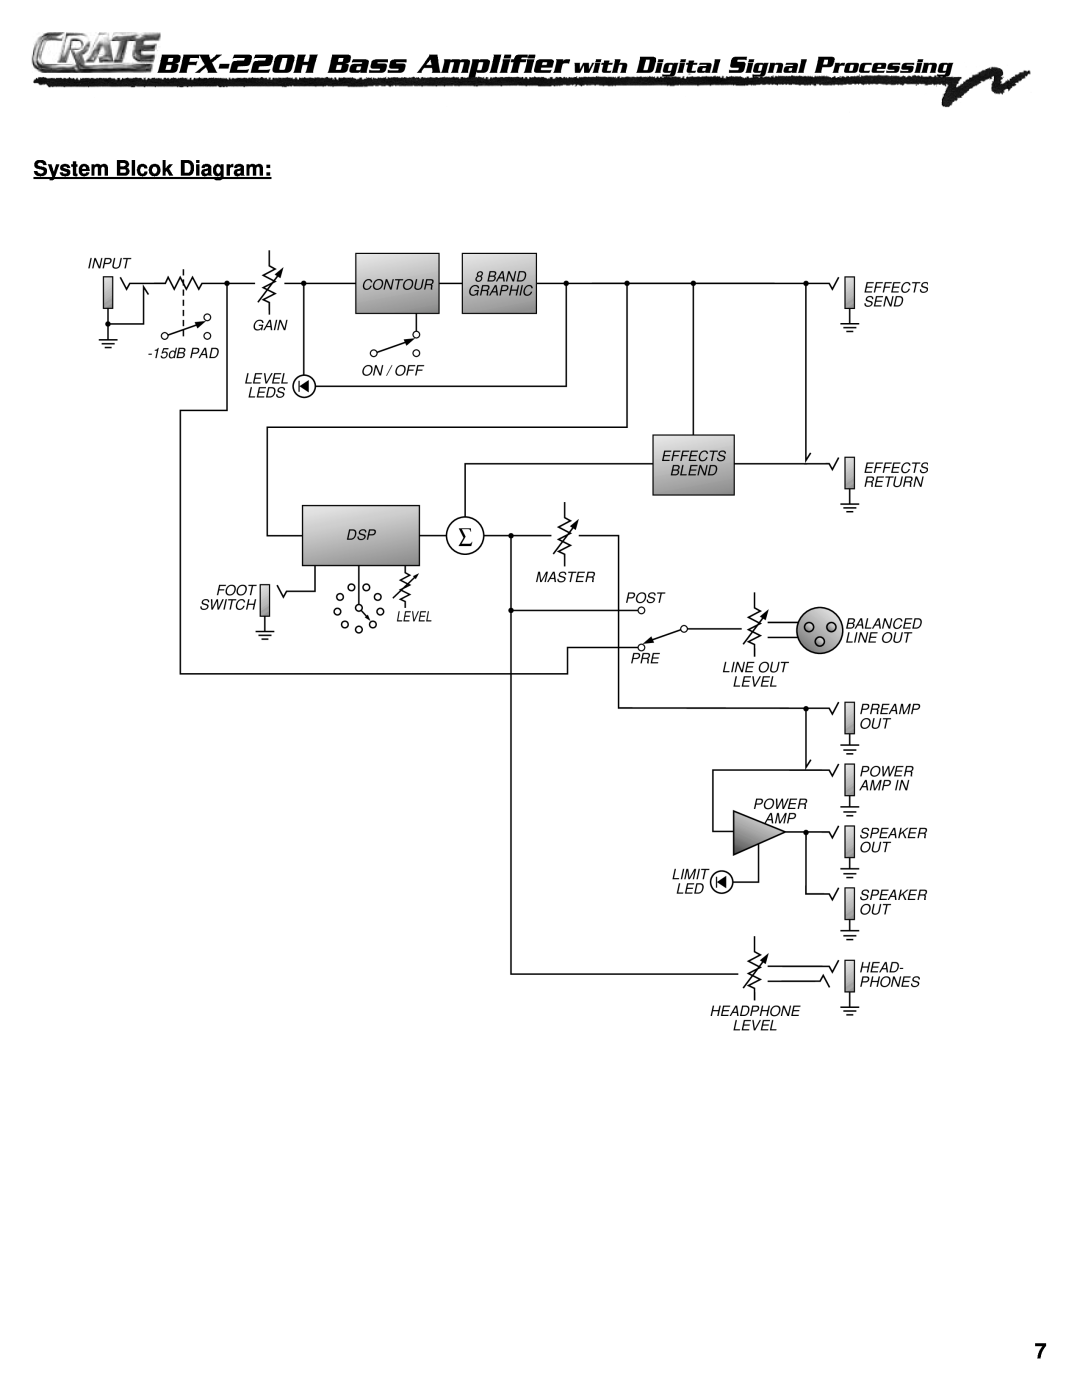 Crate Amplifiers BFX-220H manual System Blcok Diagram 